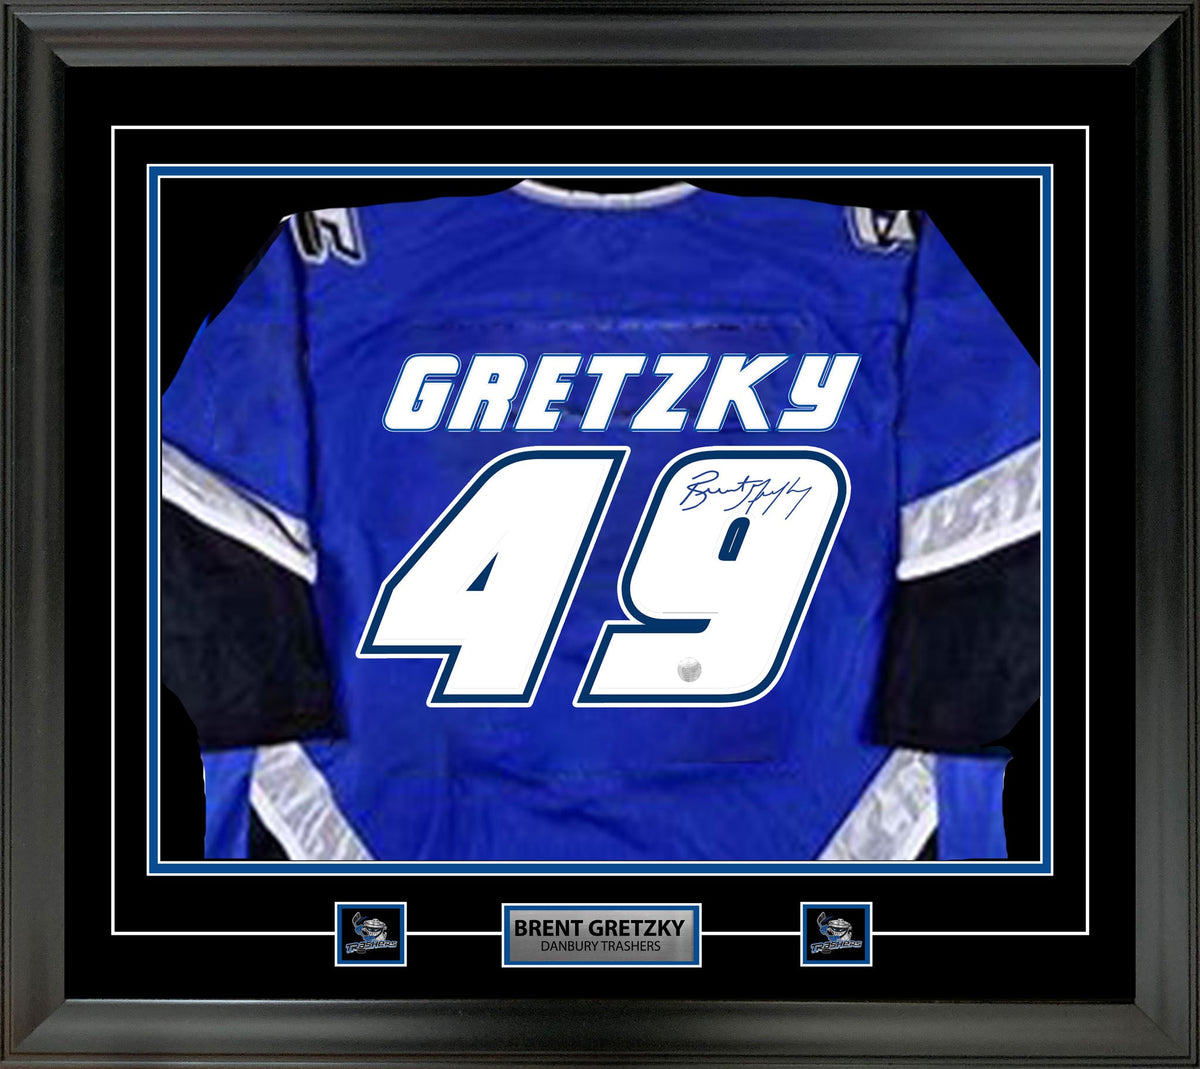 2004-05 Brent Gretzky Danbury Thrashers Game Worn Jersey